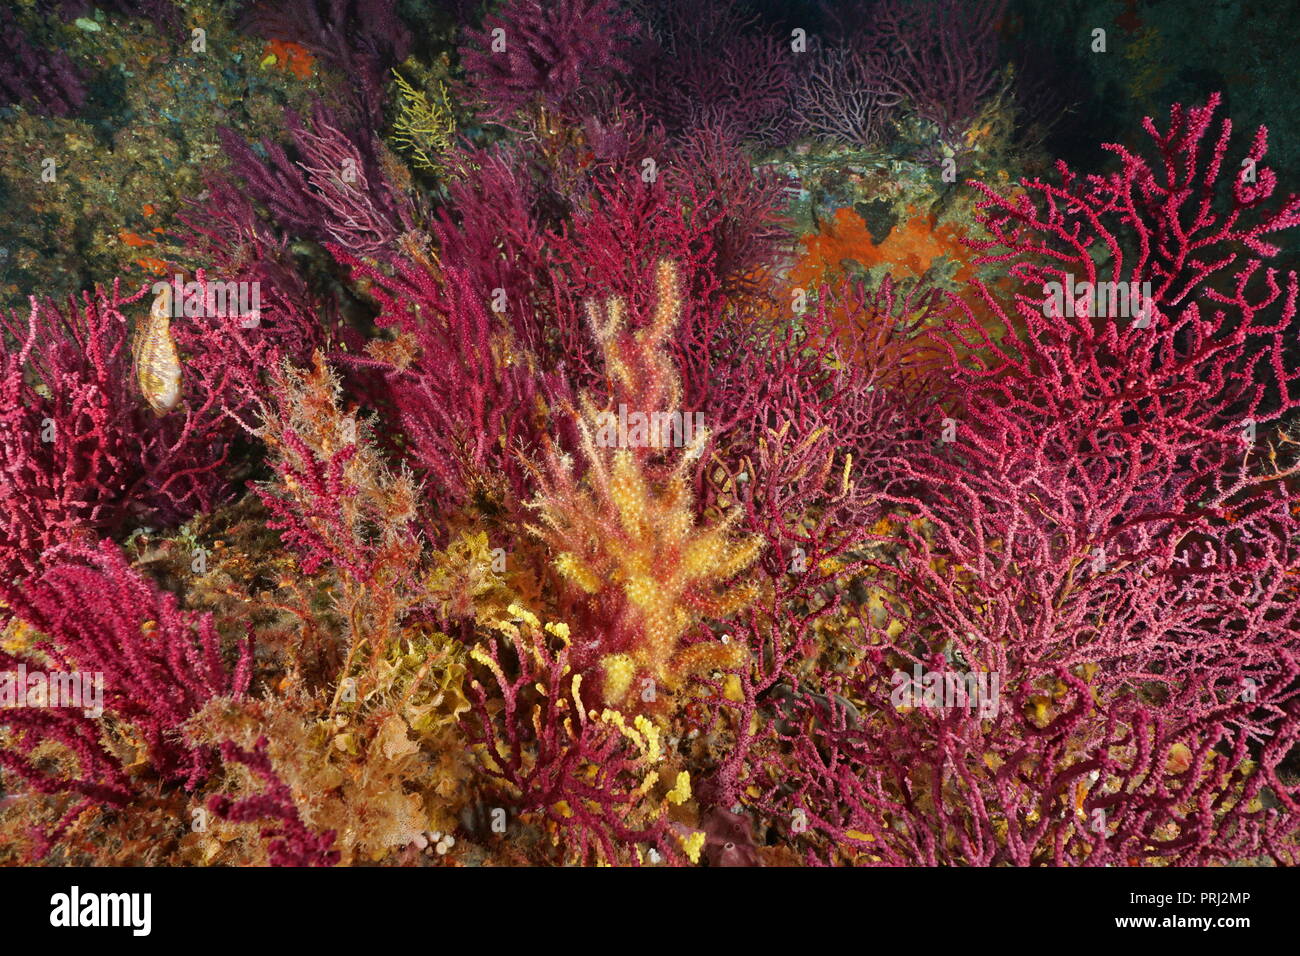 Gorgonian soft coral underwater in the Mediterranean sea, violescent sea-whip Paramuricea clavata, Cap de Creus, Costa Brava, Spain Stock Photo